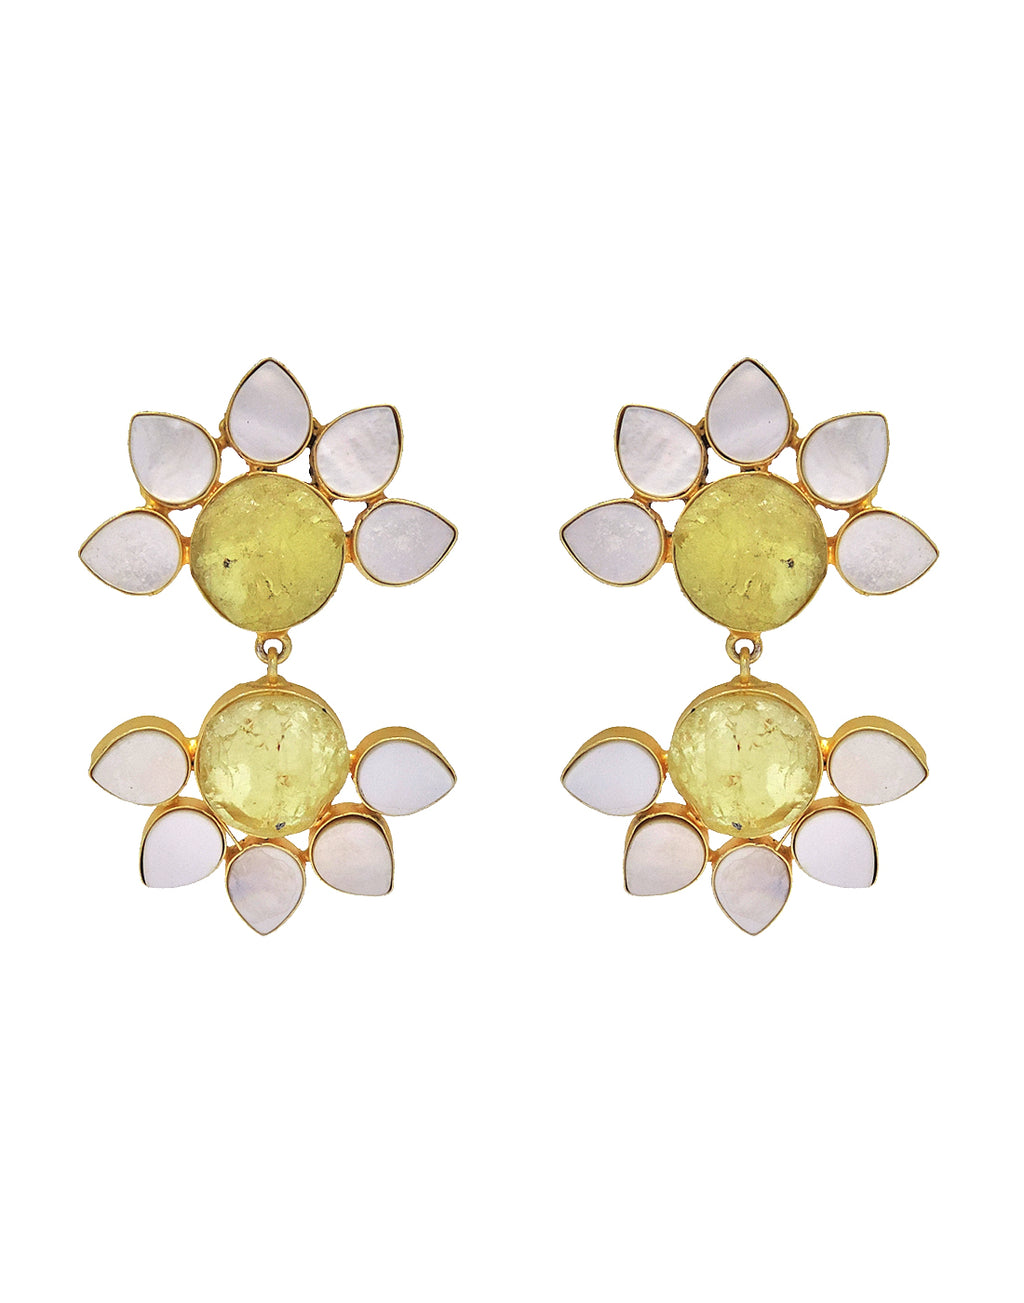 Twin Flora Earrings (Citrine) - Statement Earrings - Gold-Plated & Hypoallergenic Jewellery - Made in India - Dubai Jewellery - Dori